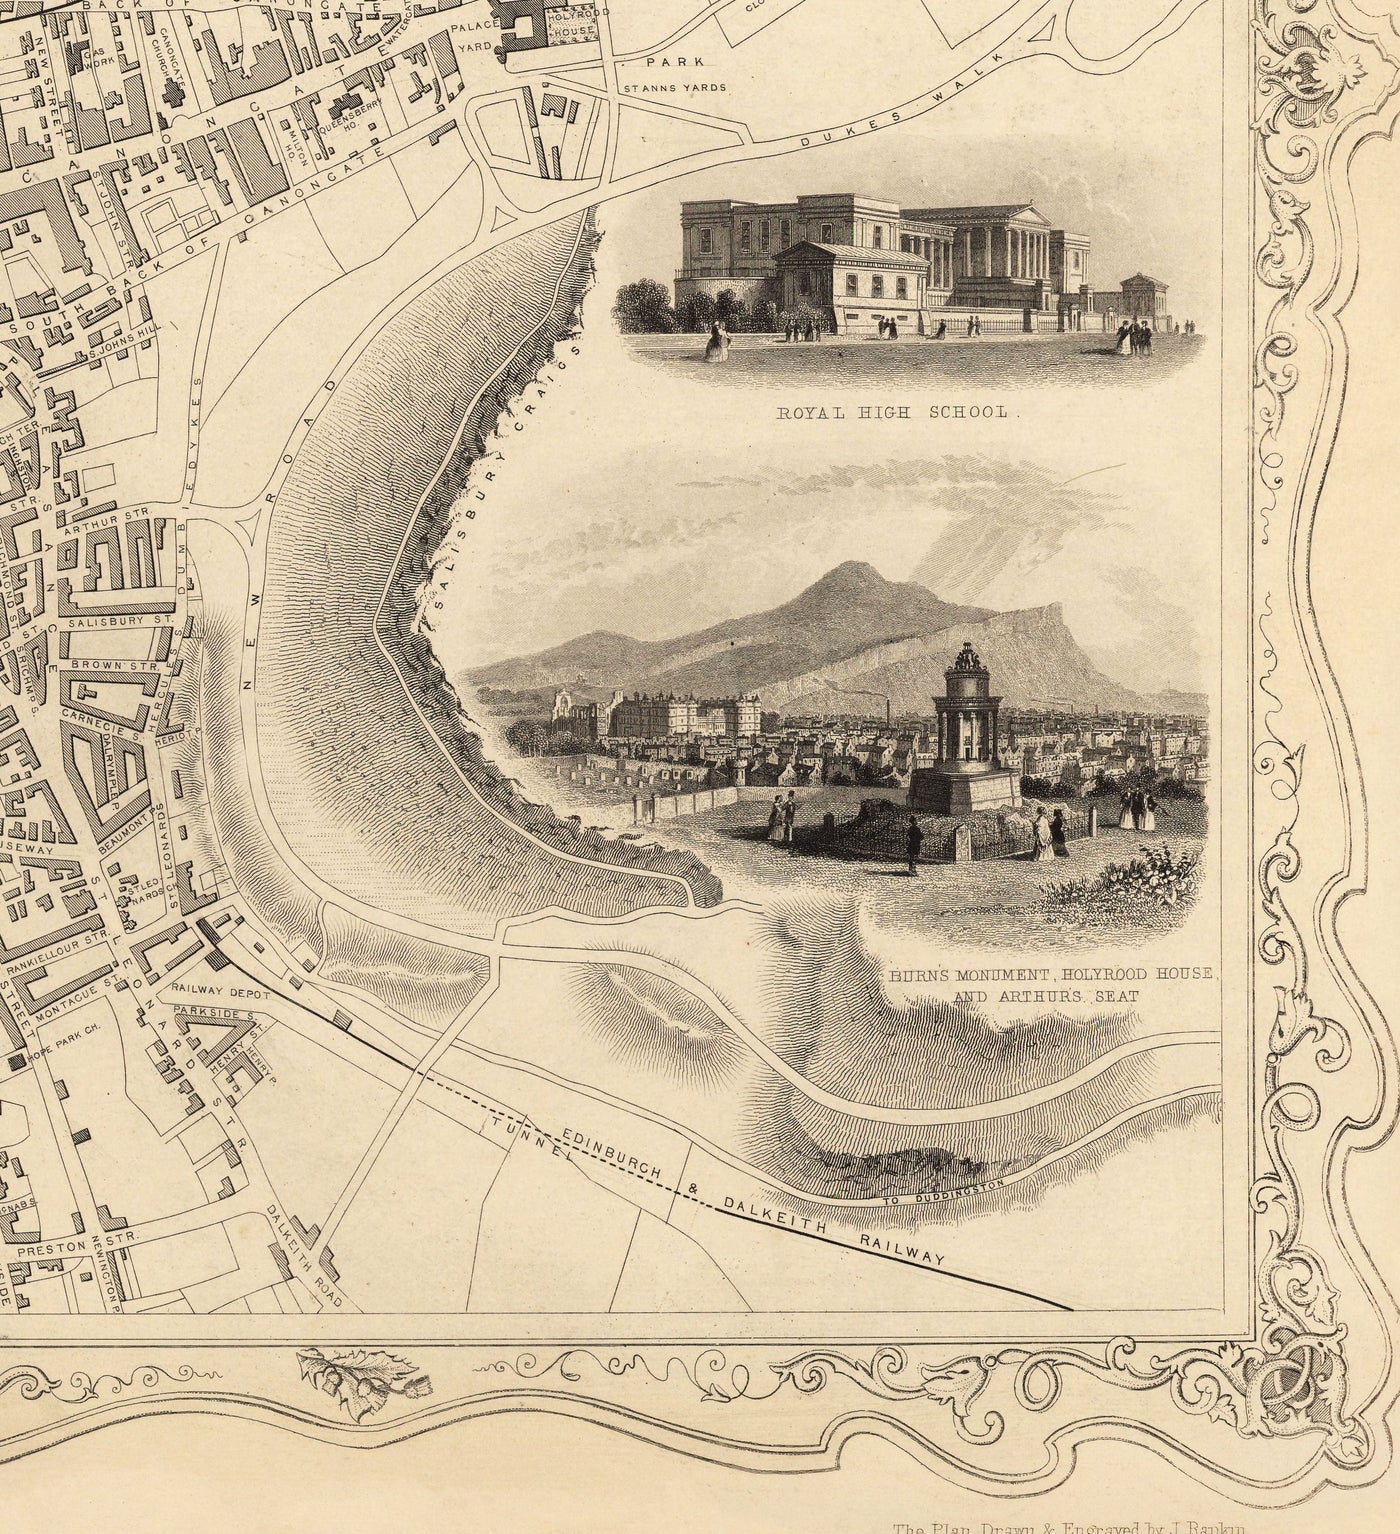 Old Map of Edinburgh, Scotland in 1851 by Tallis & Rapkin